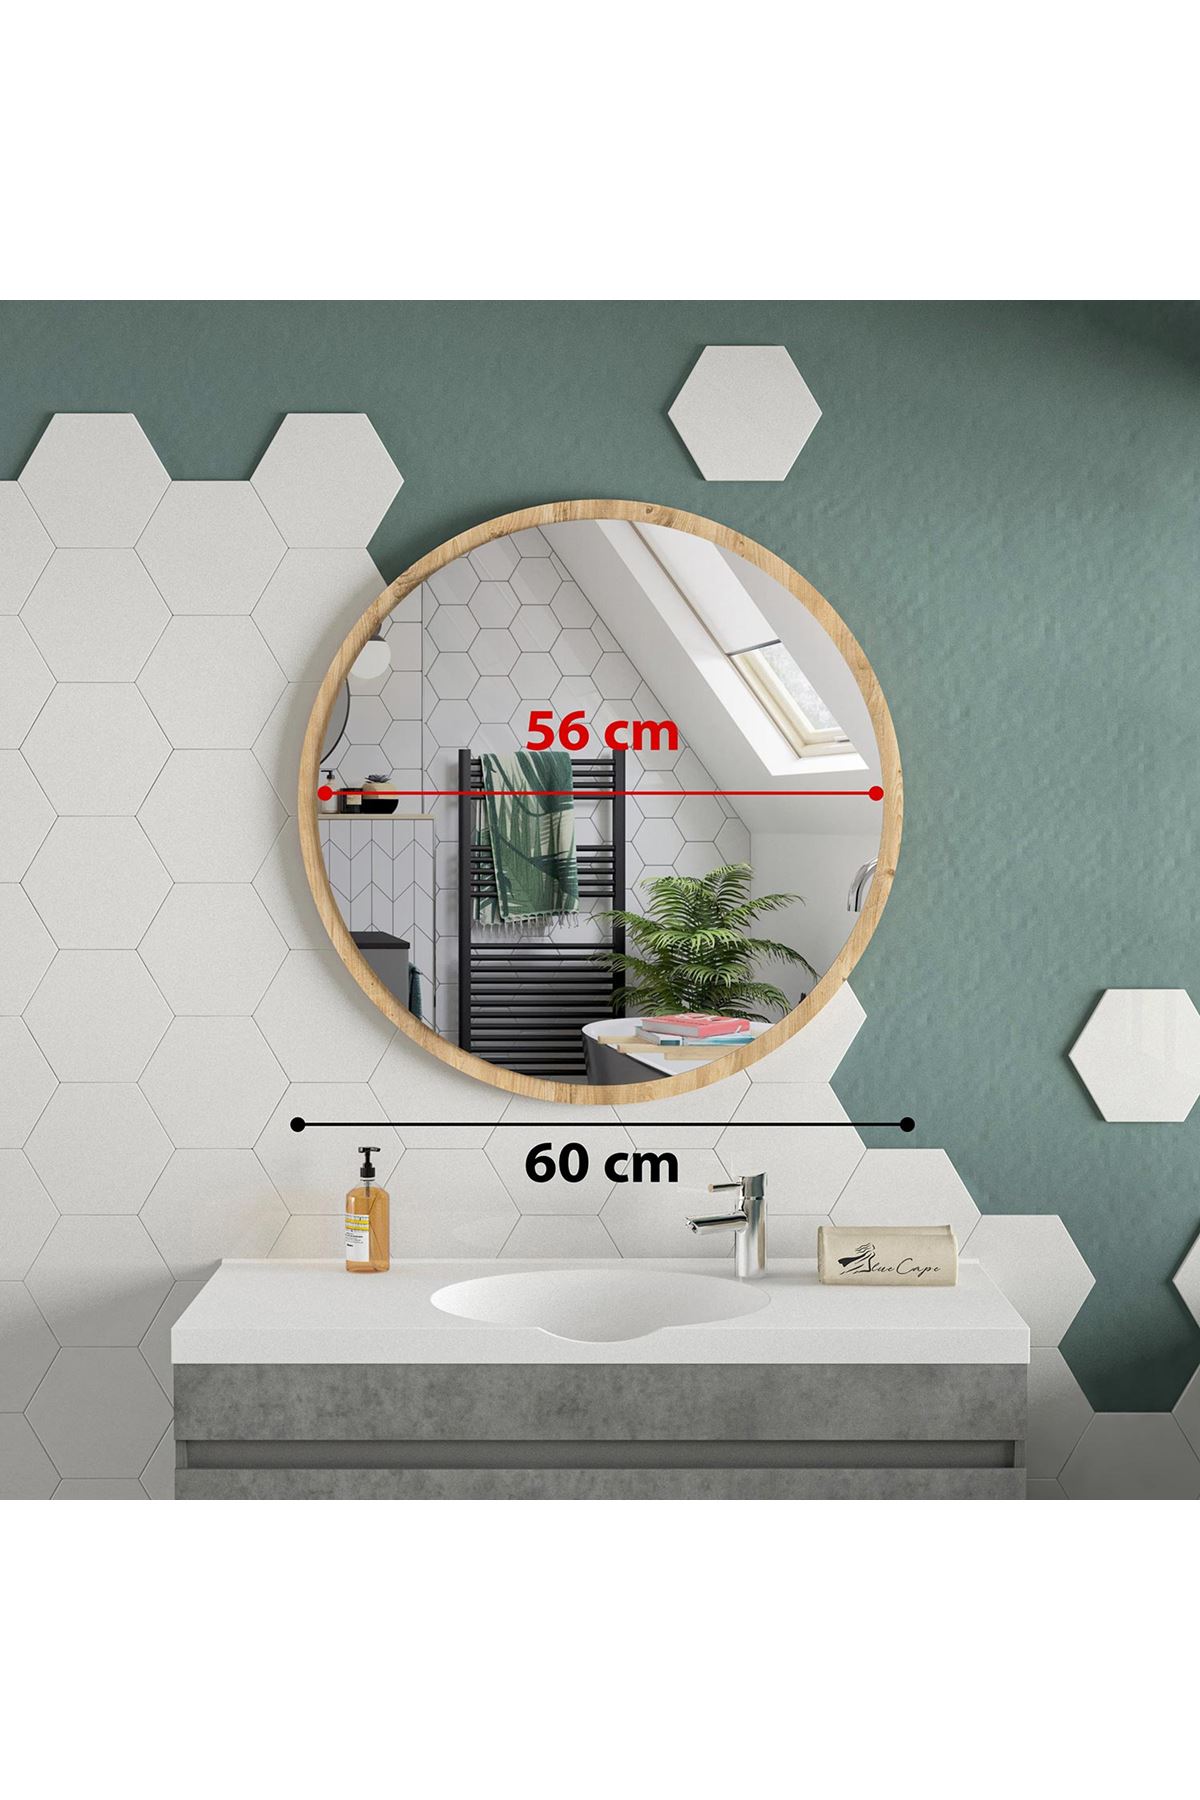 Bofigo 60 Cm Porto Banyo Aynası Dekoratif Lavabo Aynası Yuvarlak Ayna Çam